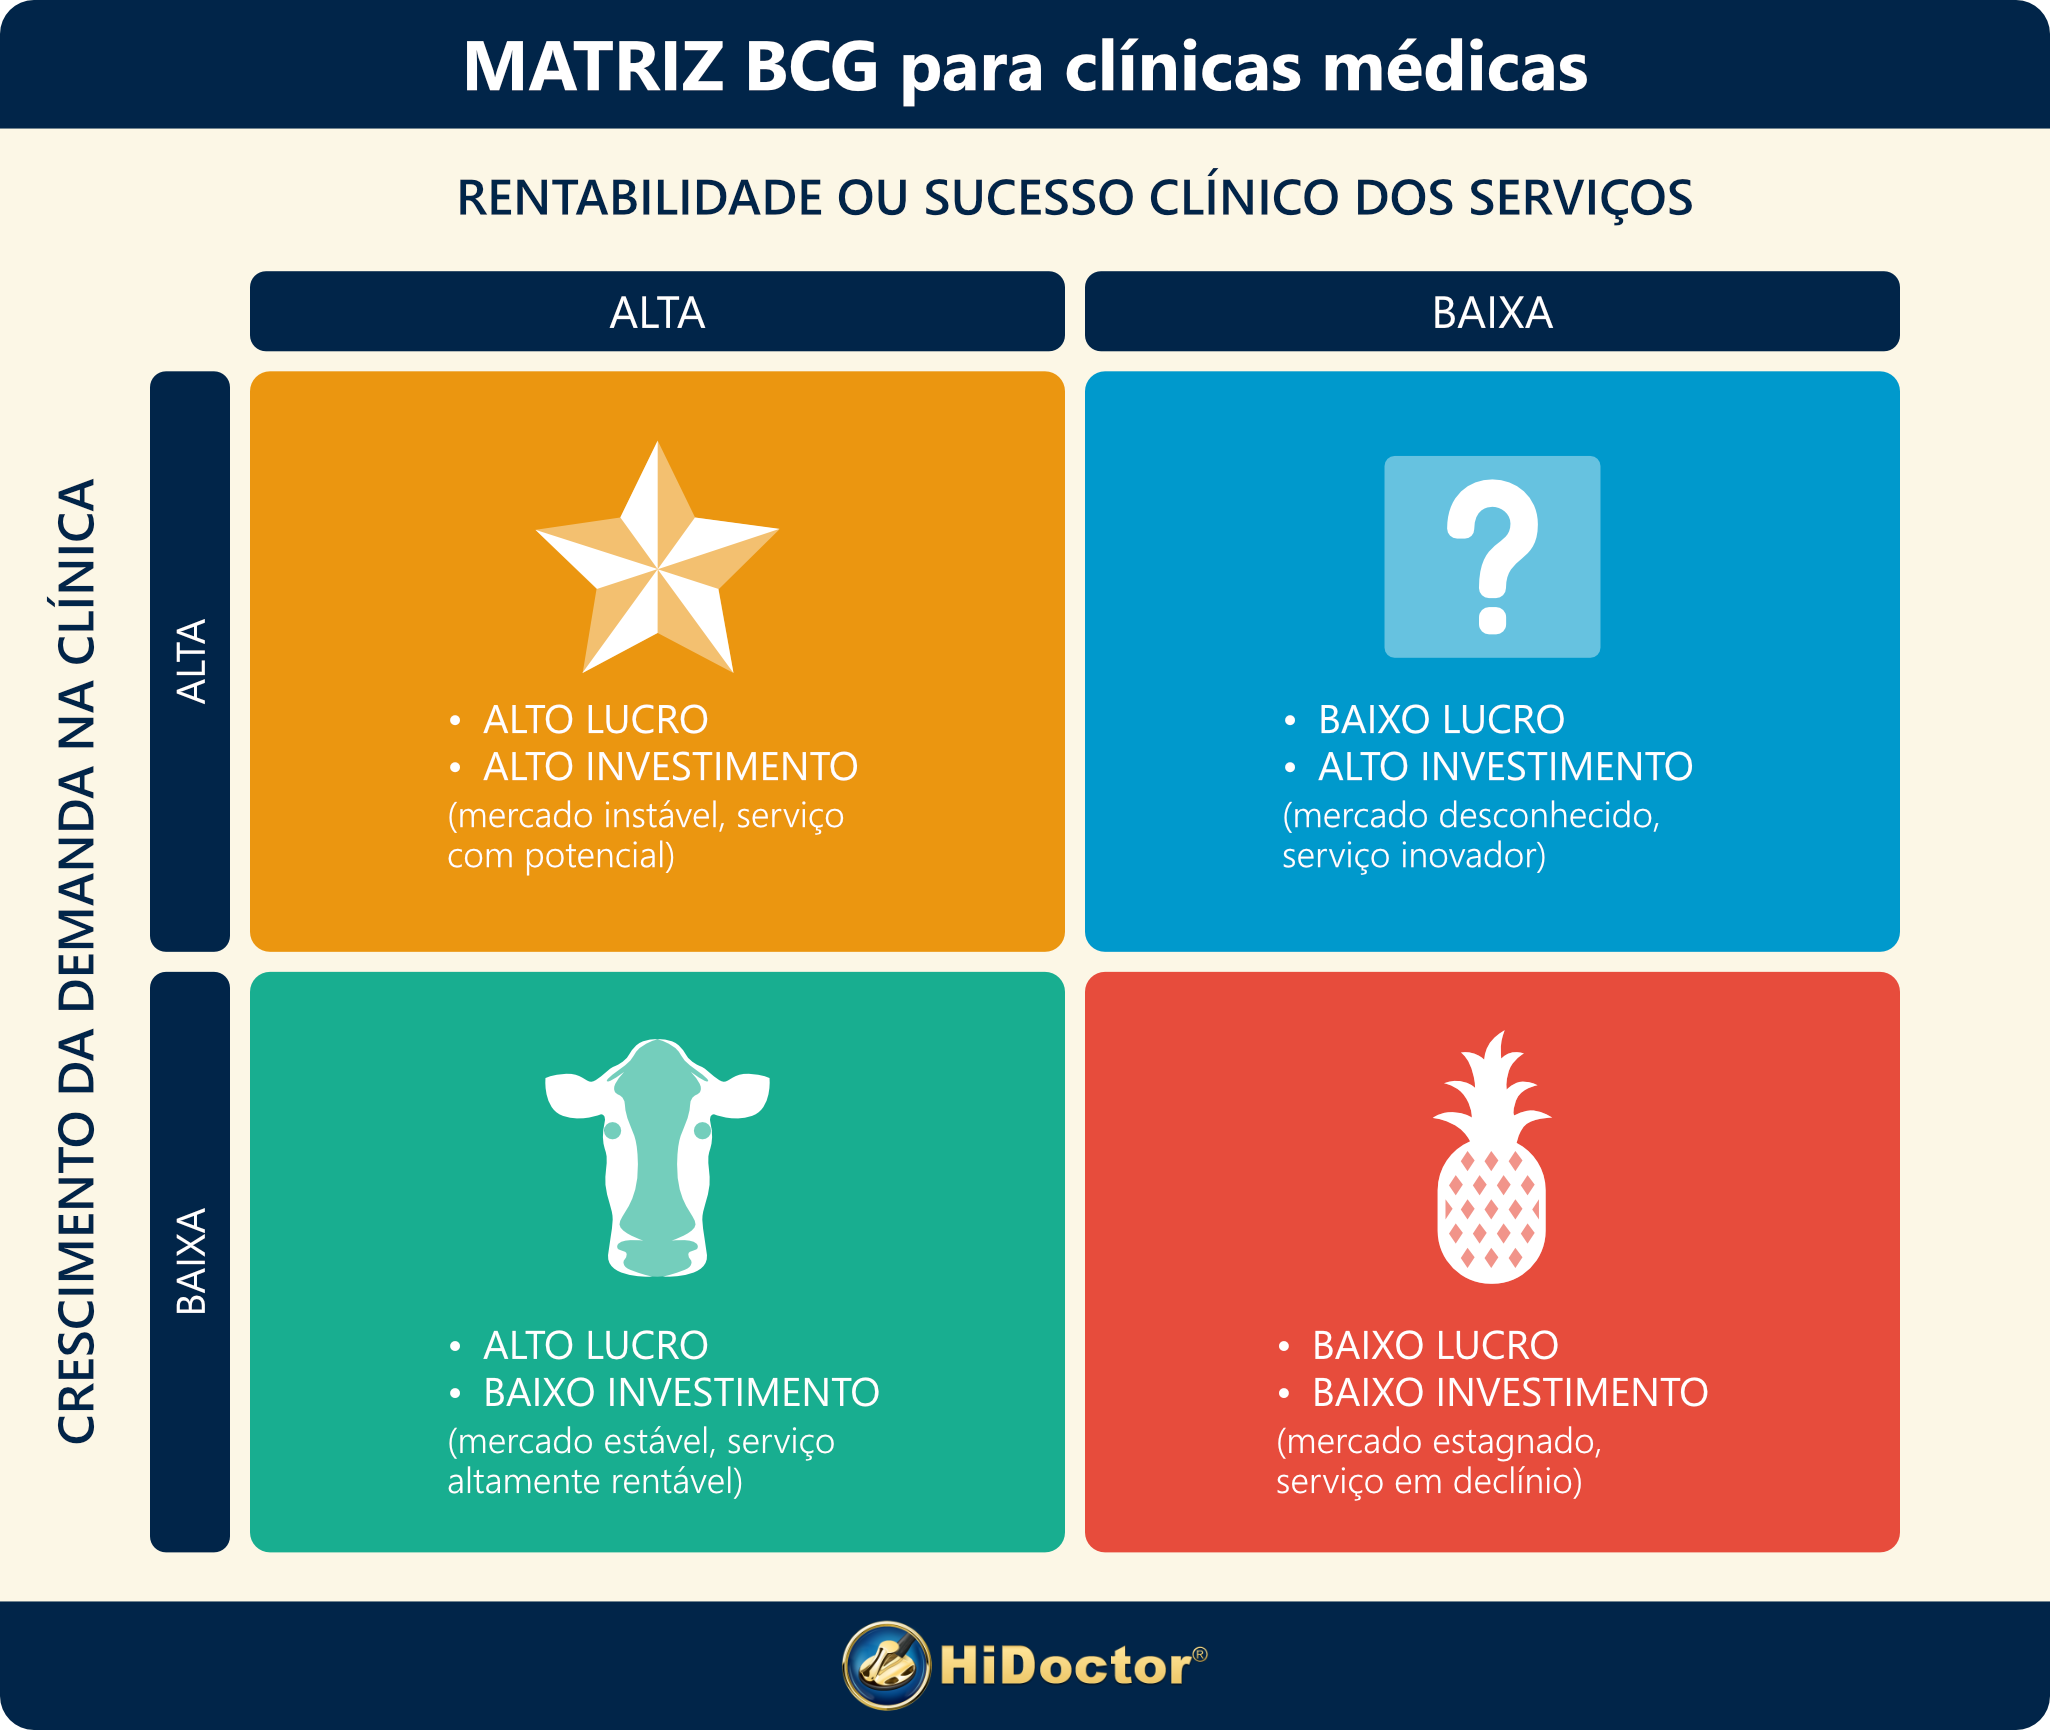 Modelo de Matriz BCG adaptado para clínicas médicas